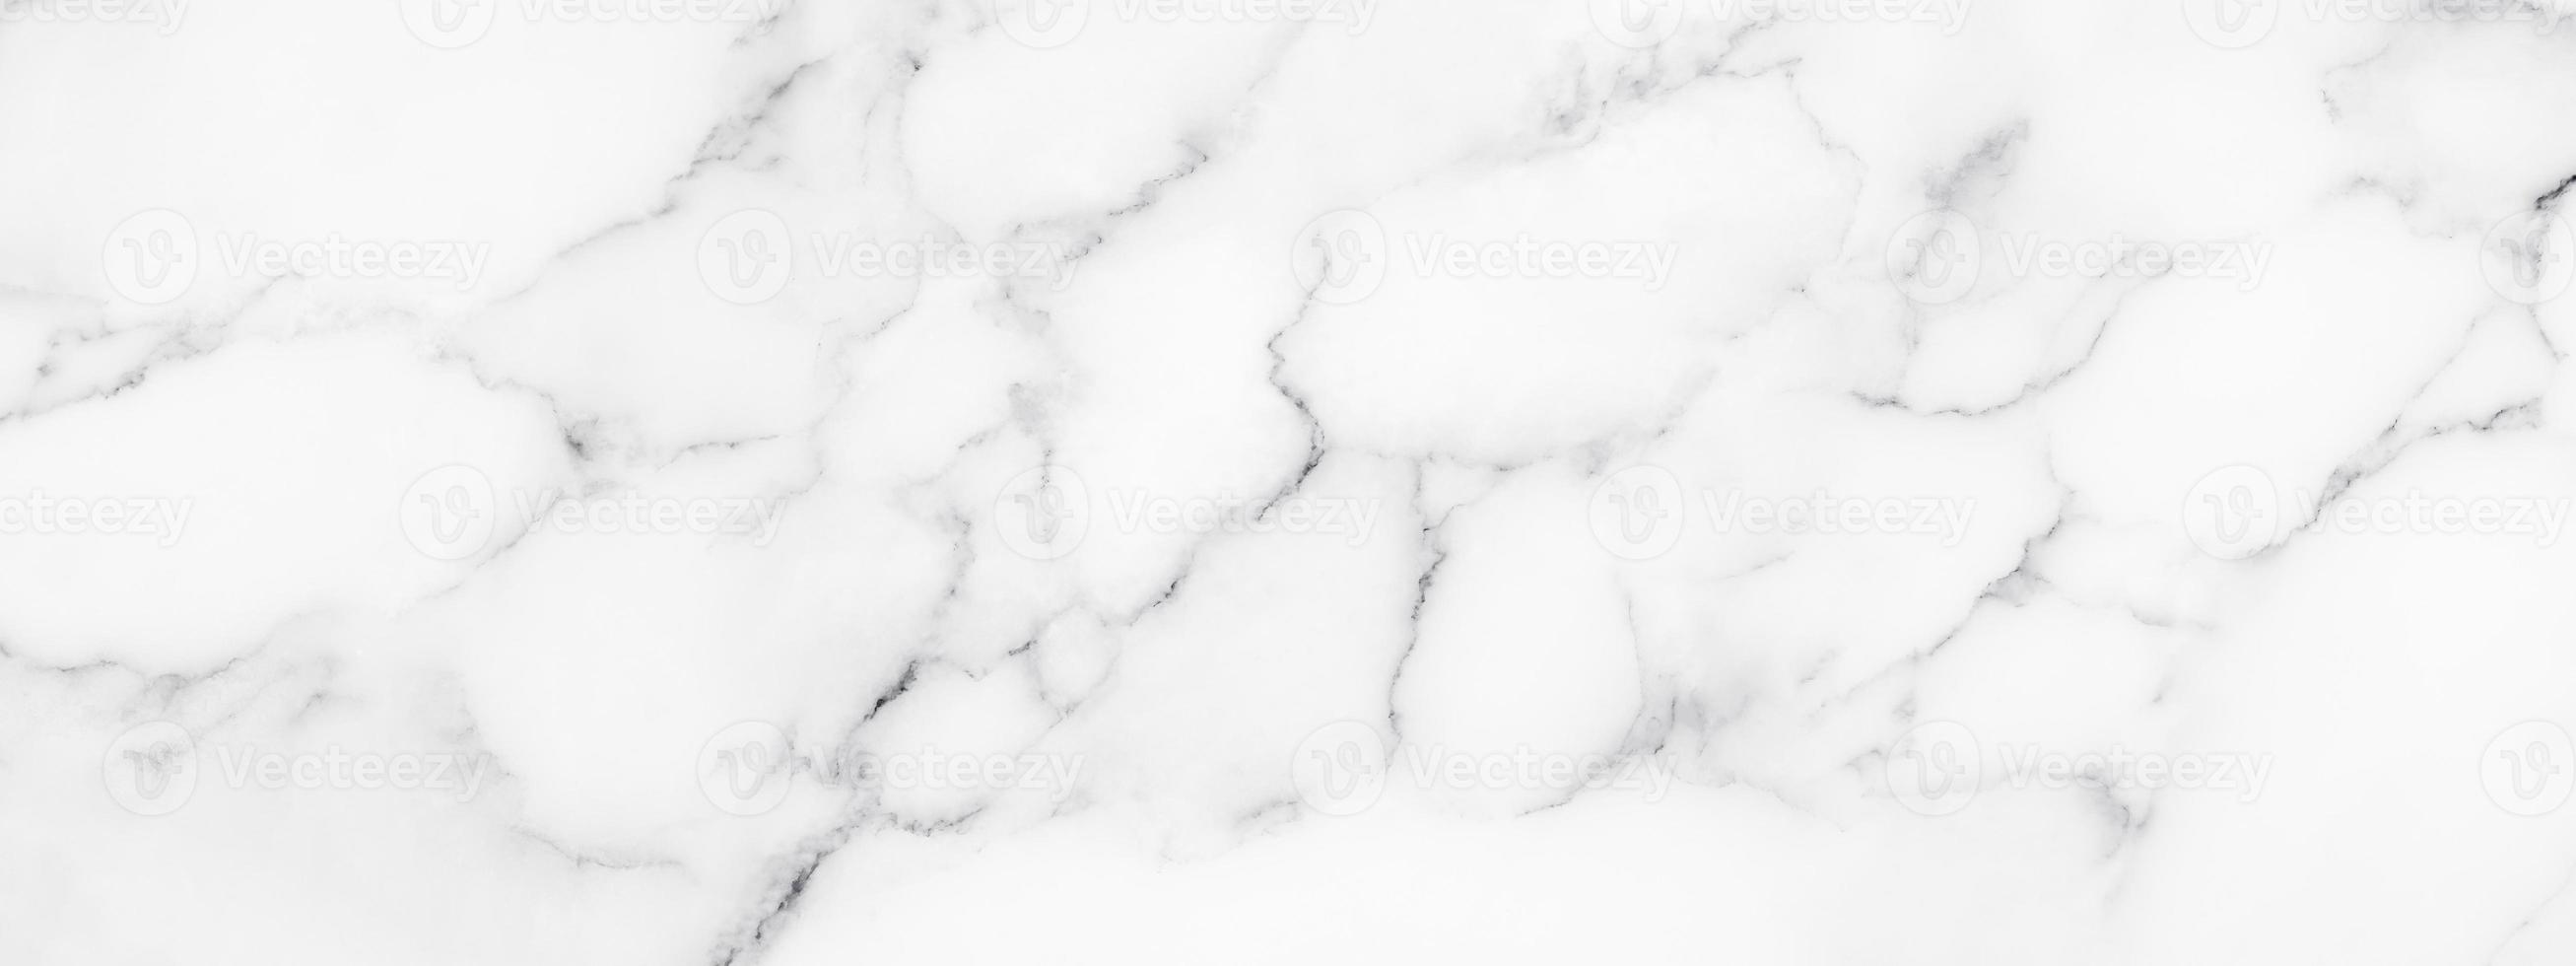 textura de pedra de mármore branco panorama para fundo ou piso de azulejos luxuosos e design decorativo de papel de parede. foto